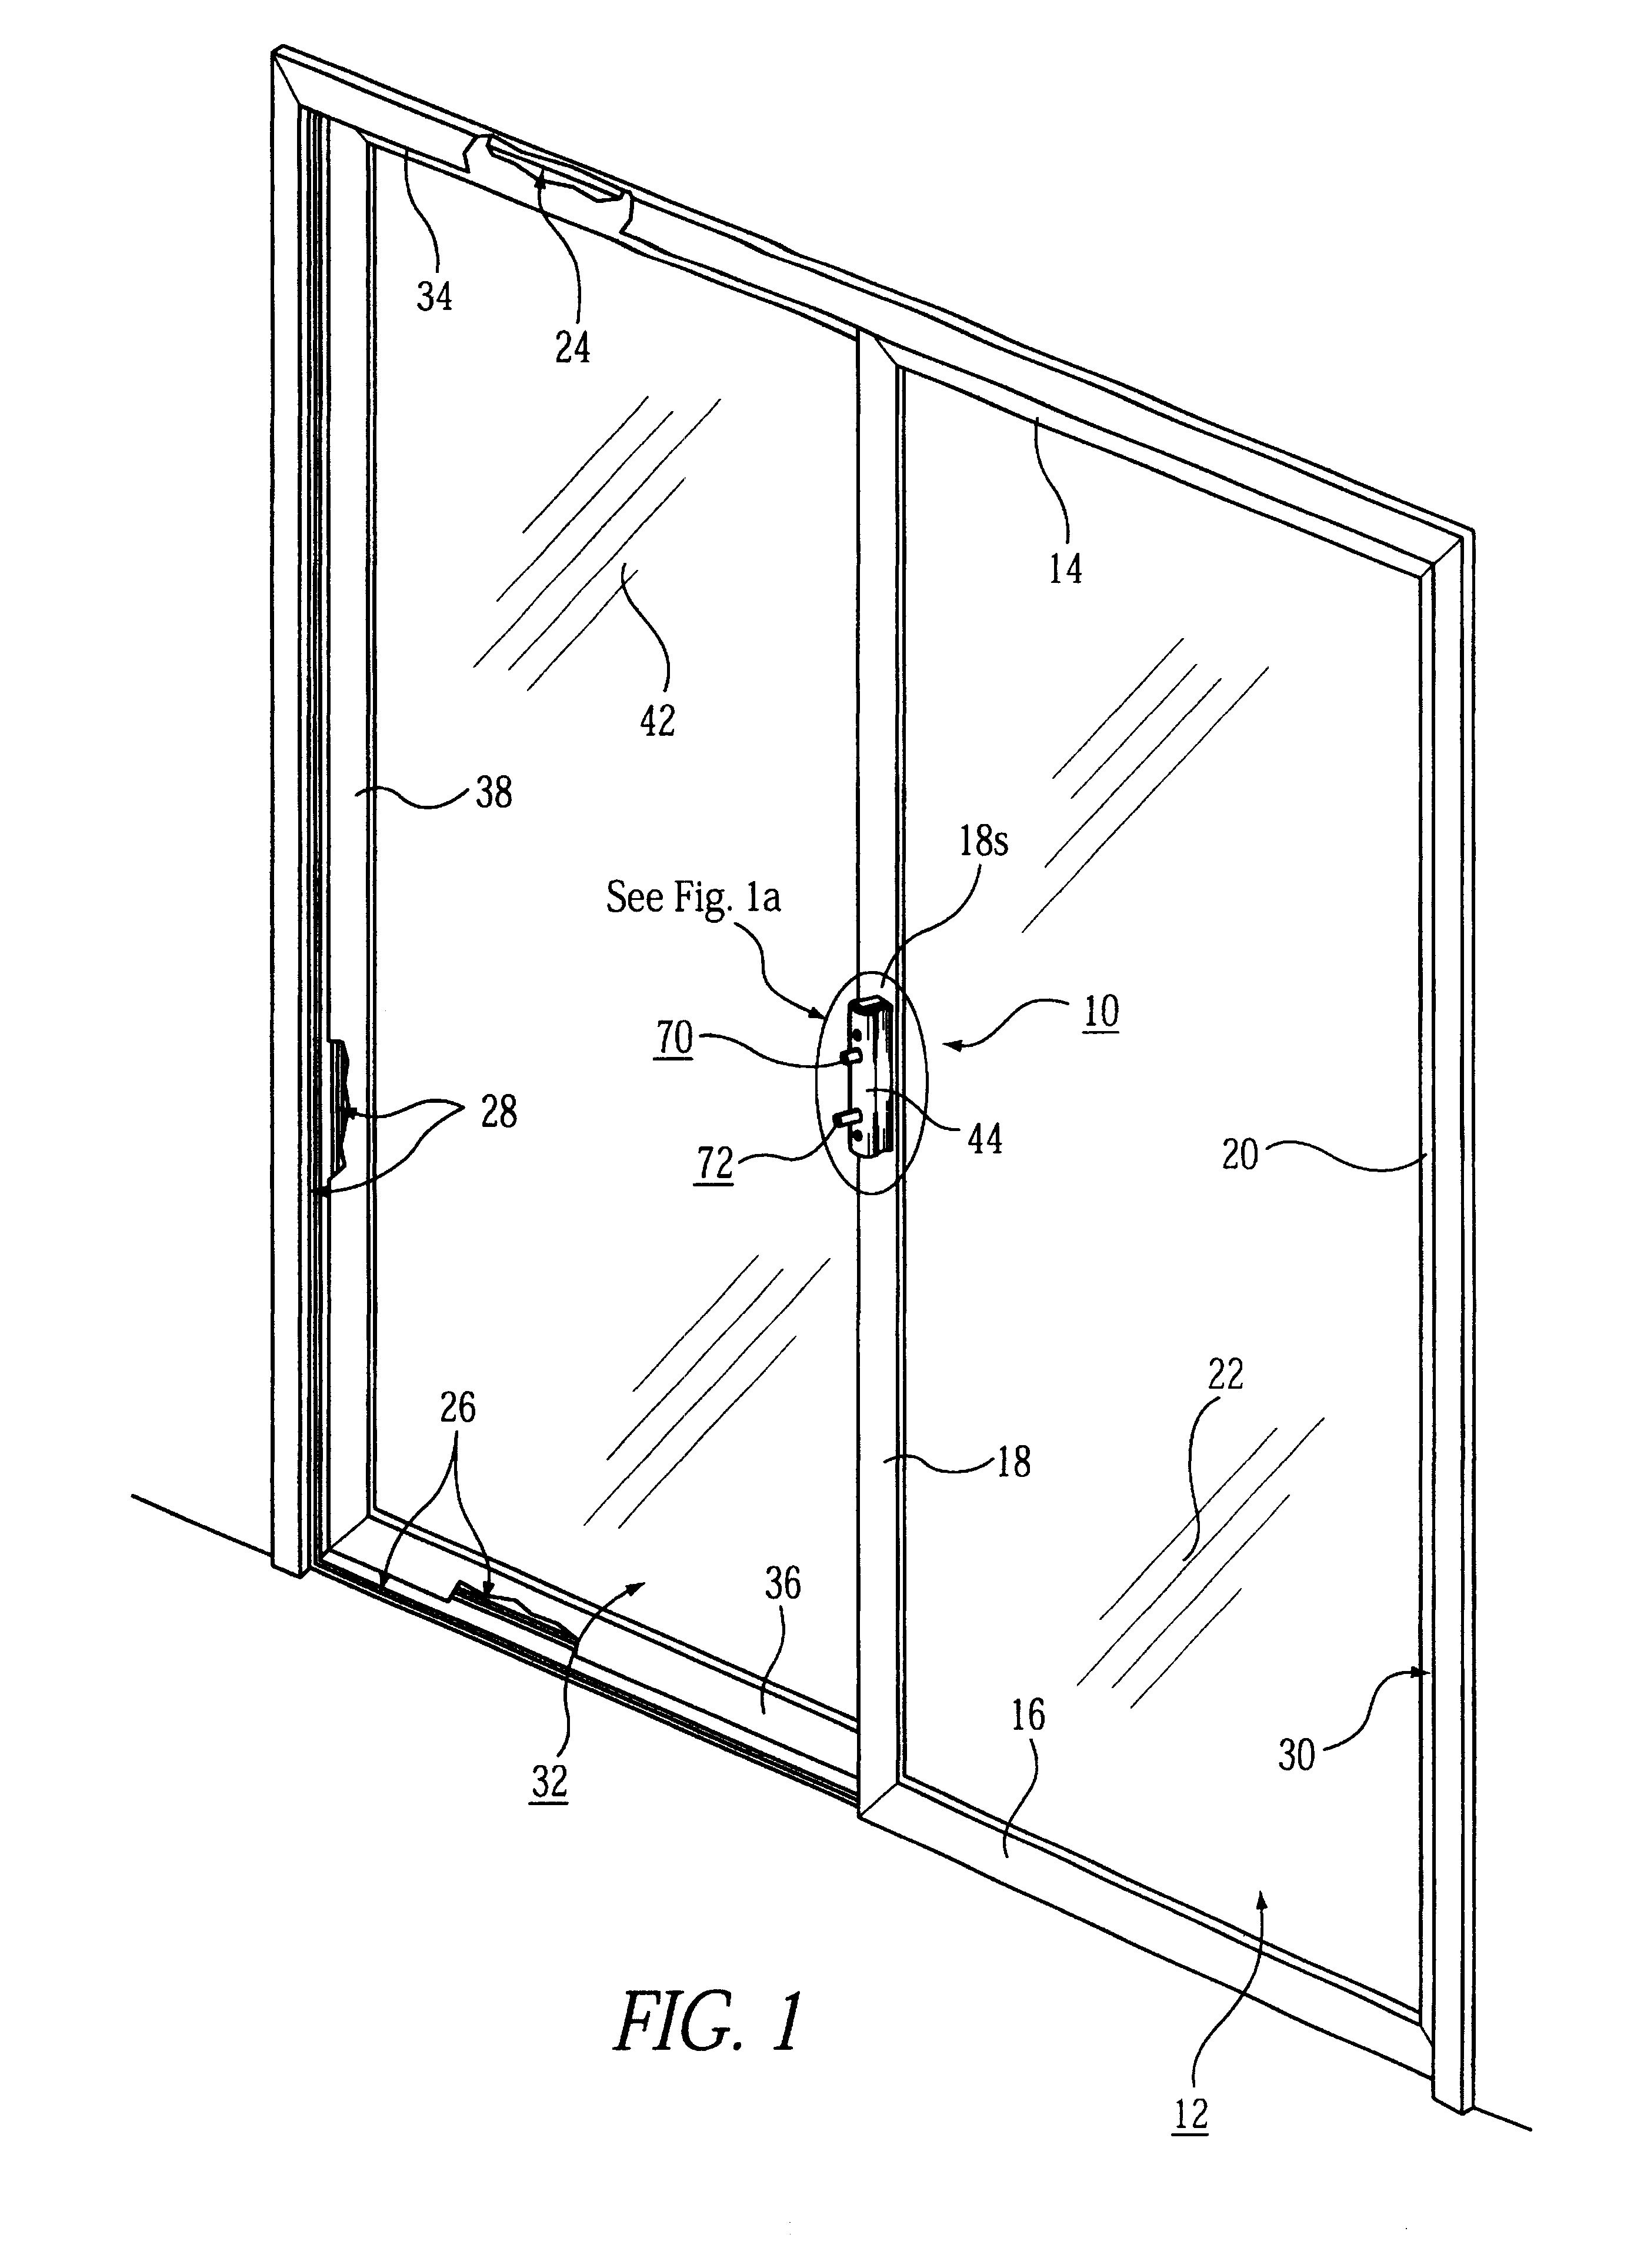 Window and sliding glass door having push button locking mechanism